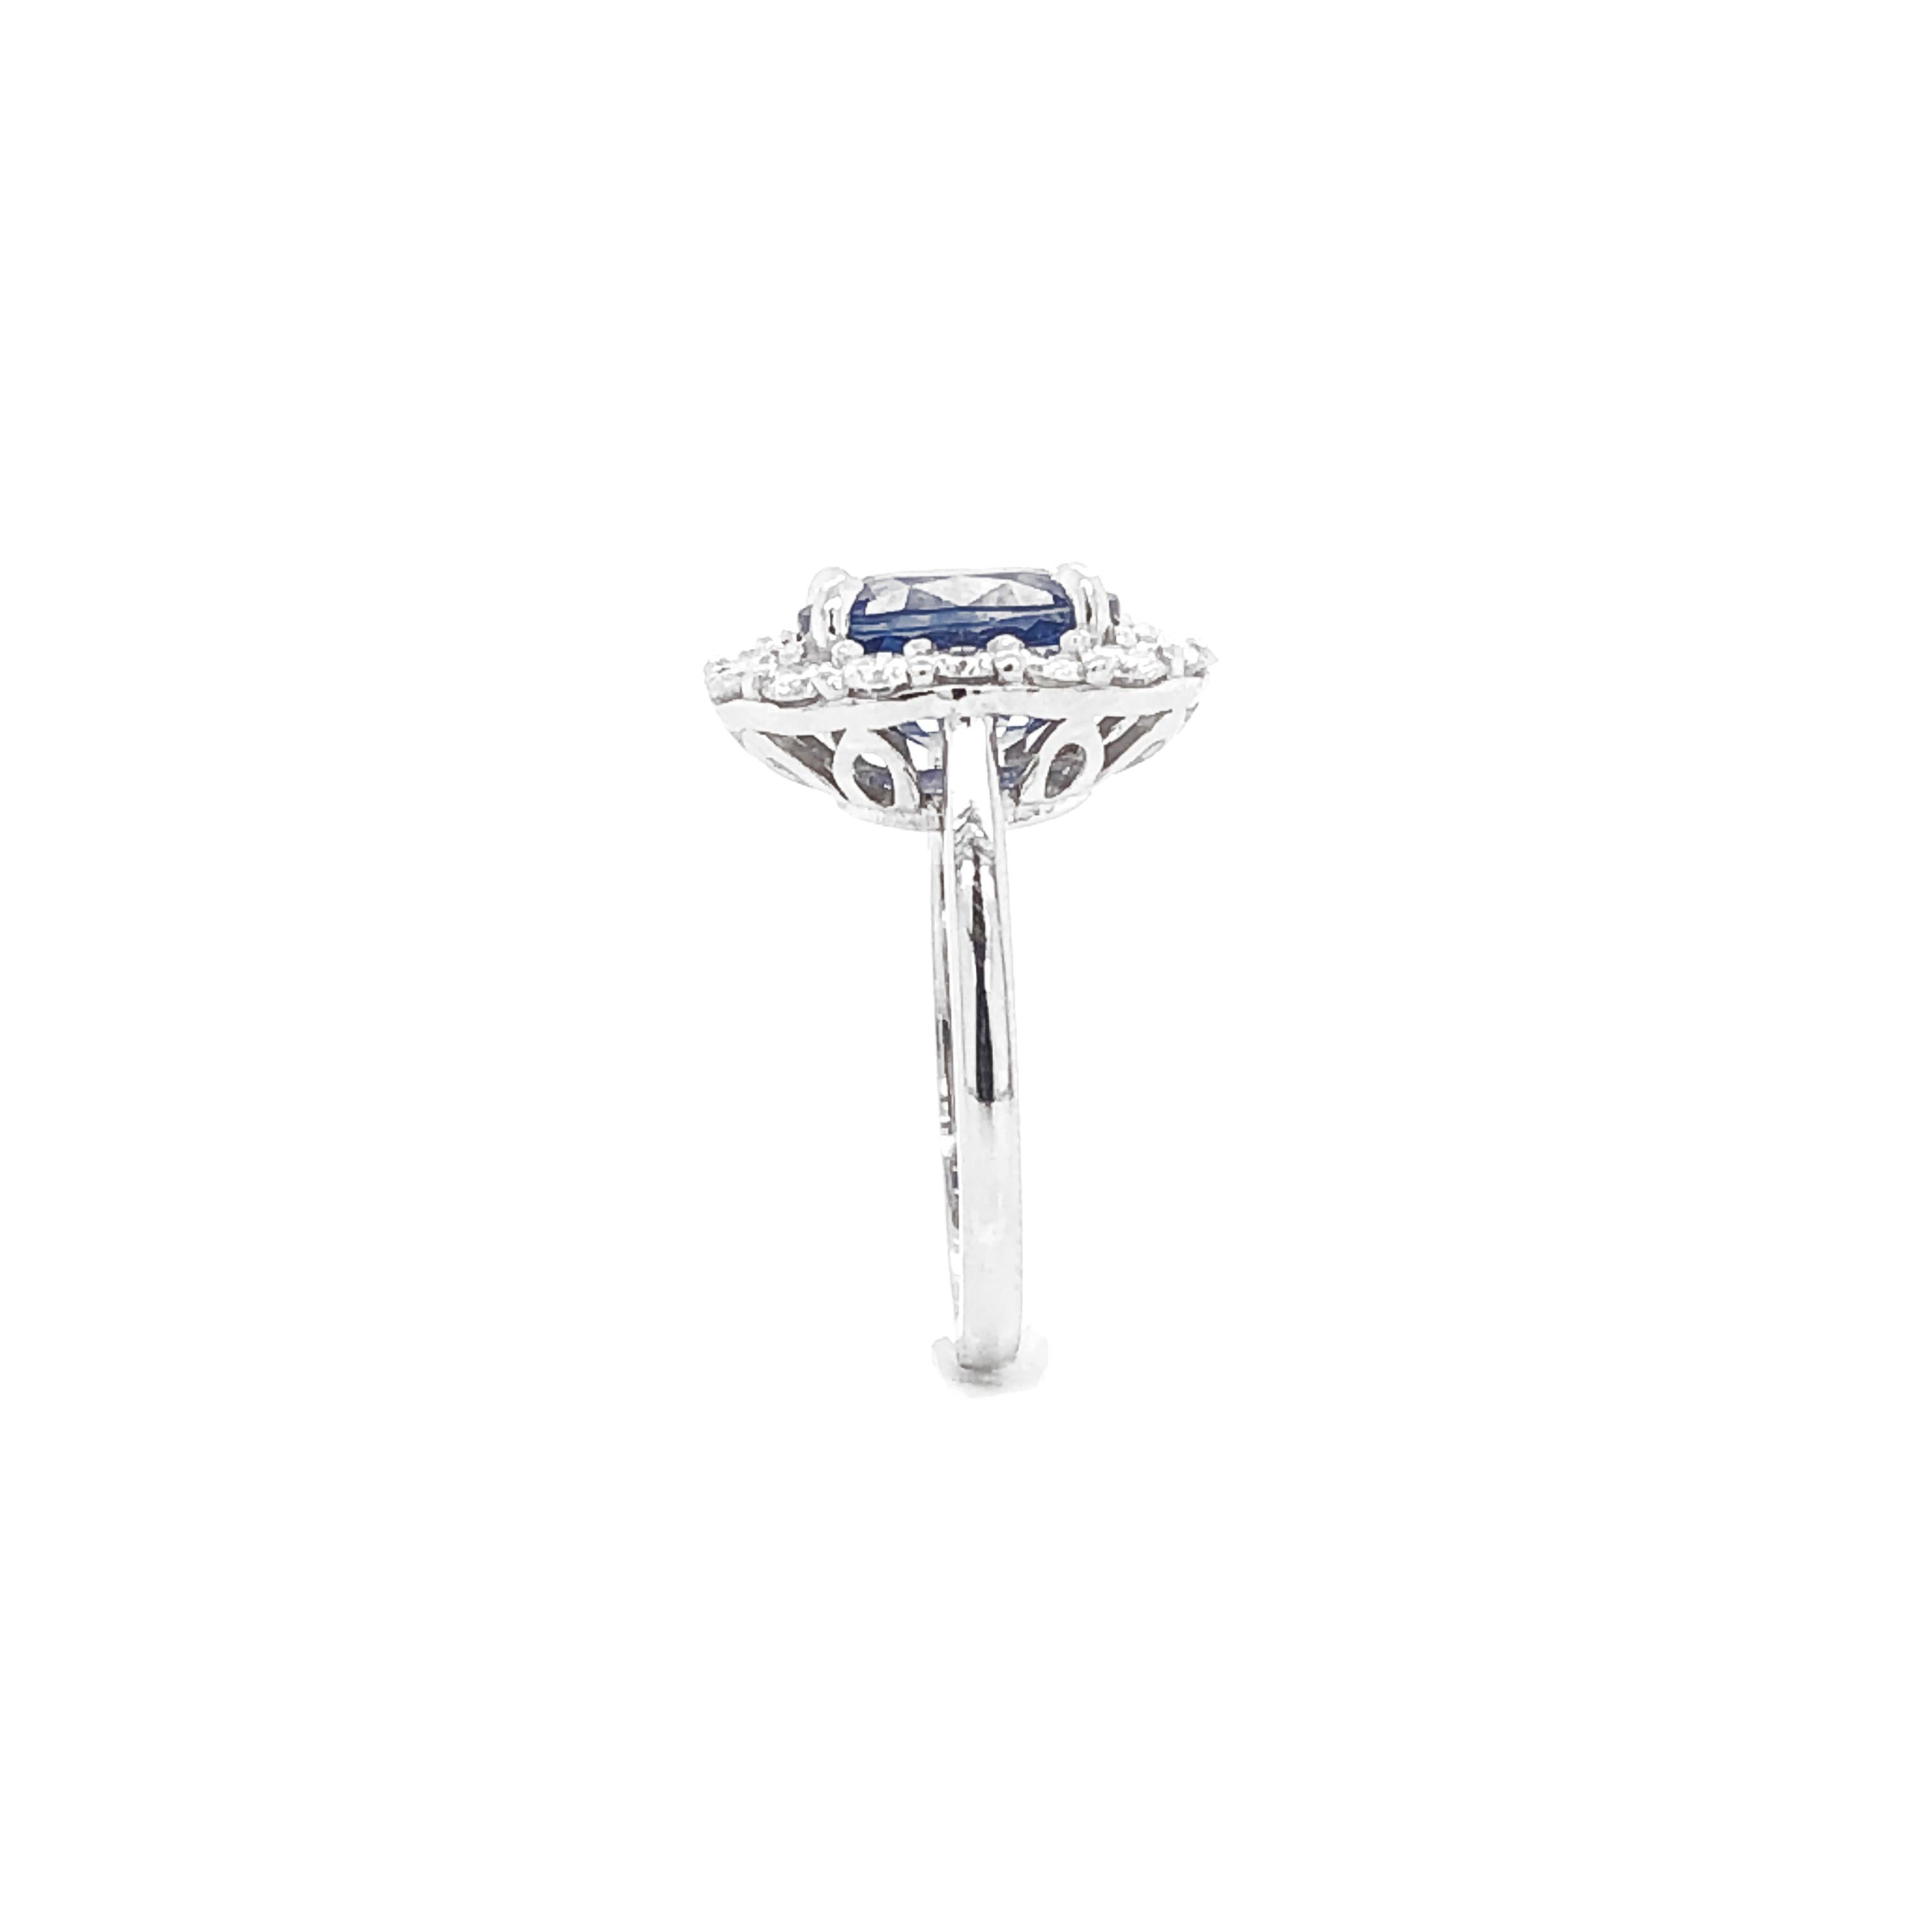 Cushion blue ceylon oval sapphire 4.69 ct round diamonds 1.28 ct platinum ring For Sale 2